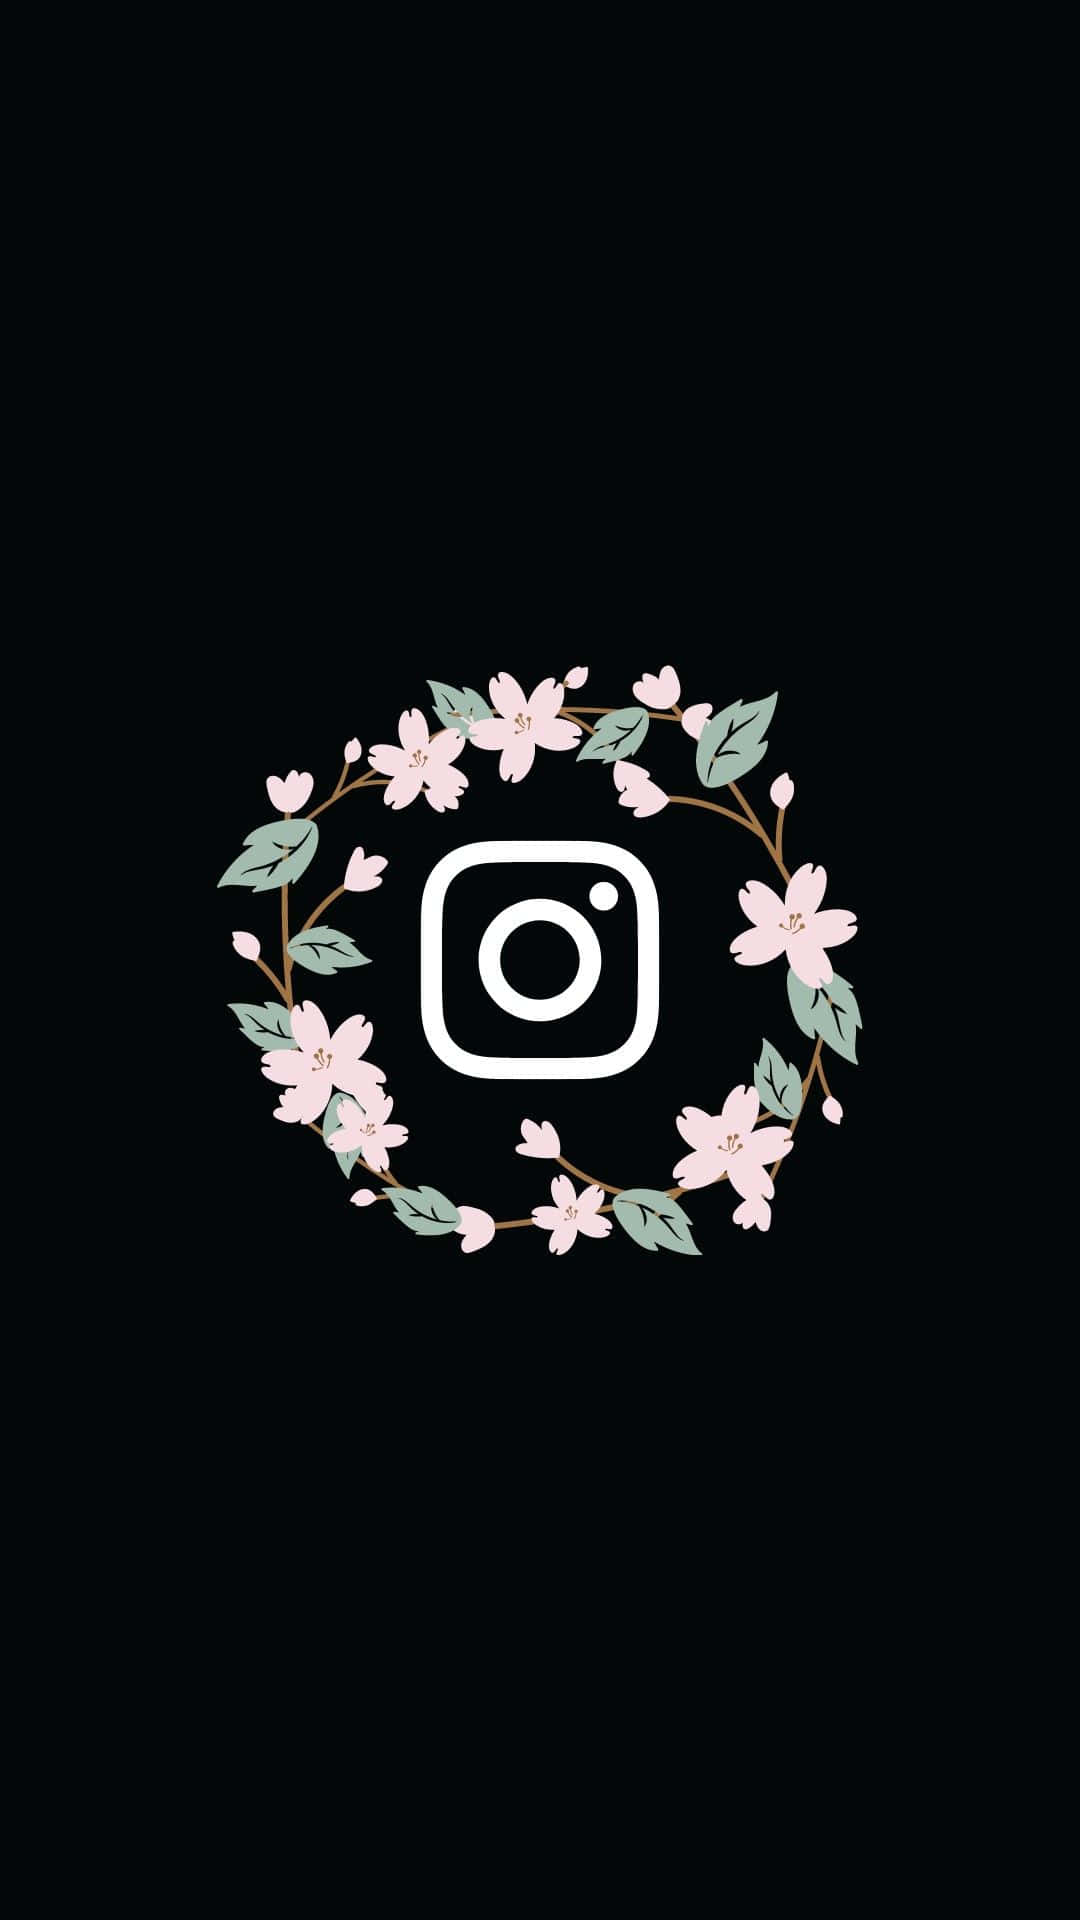 Download Instagram Logo Flower Wreath Black Background | Wallpapers.com